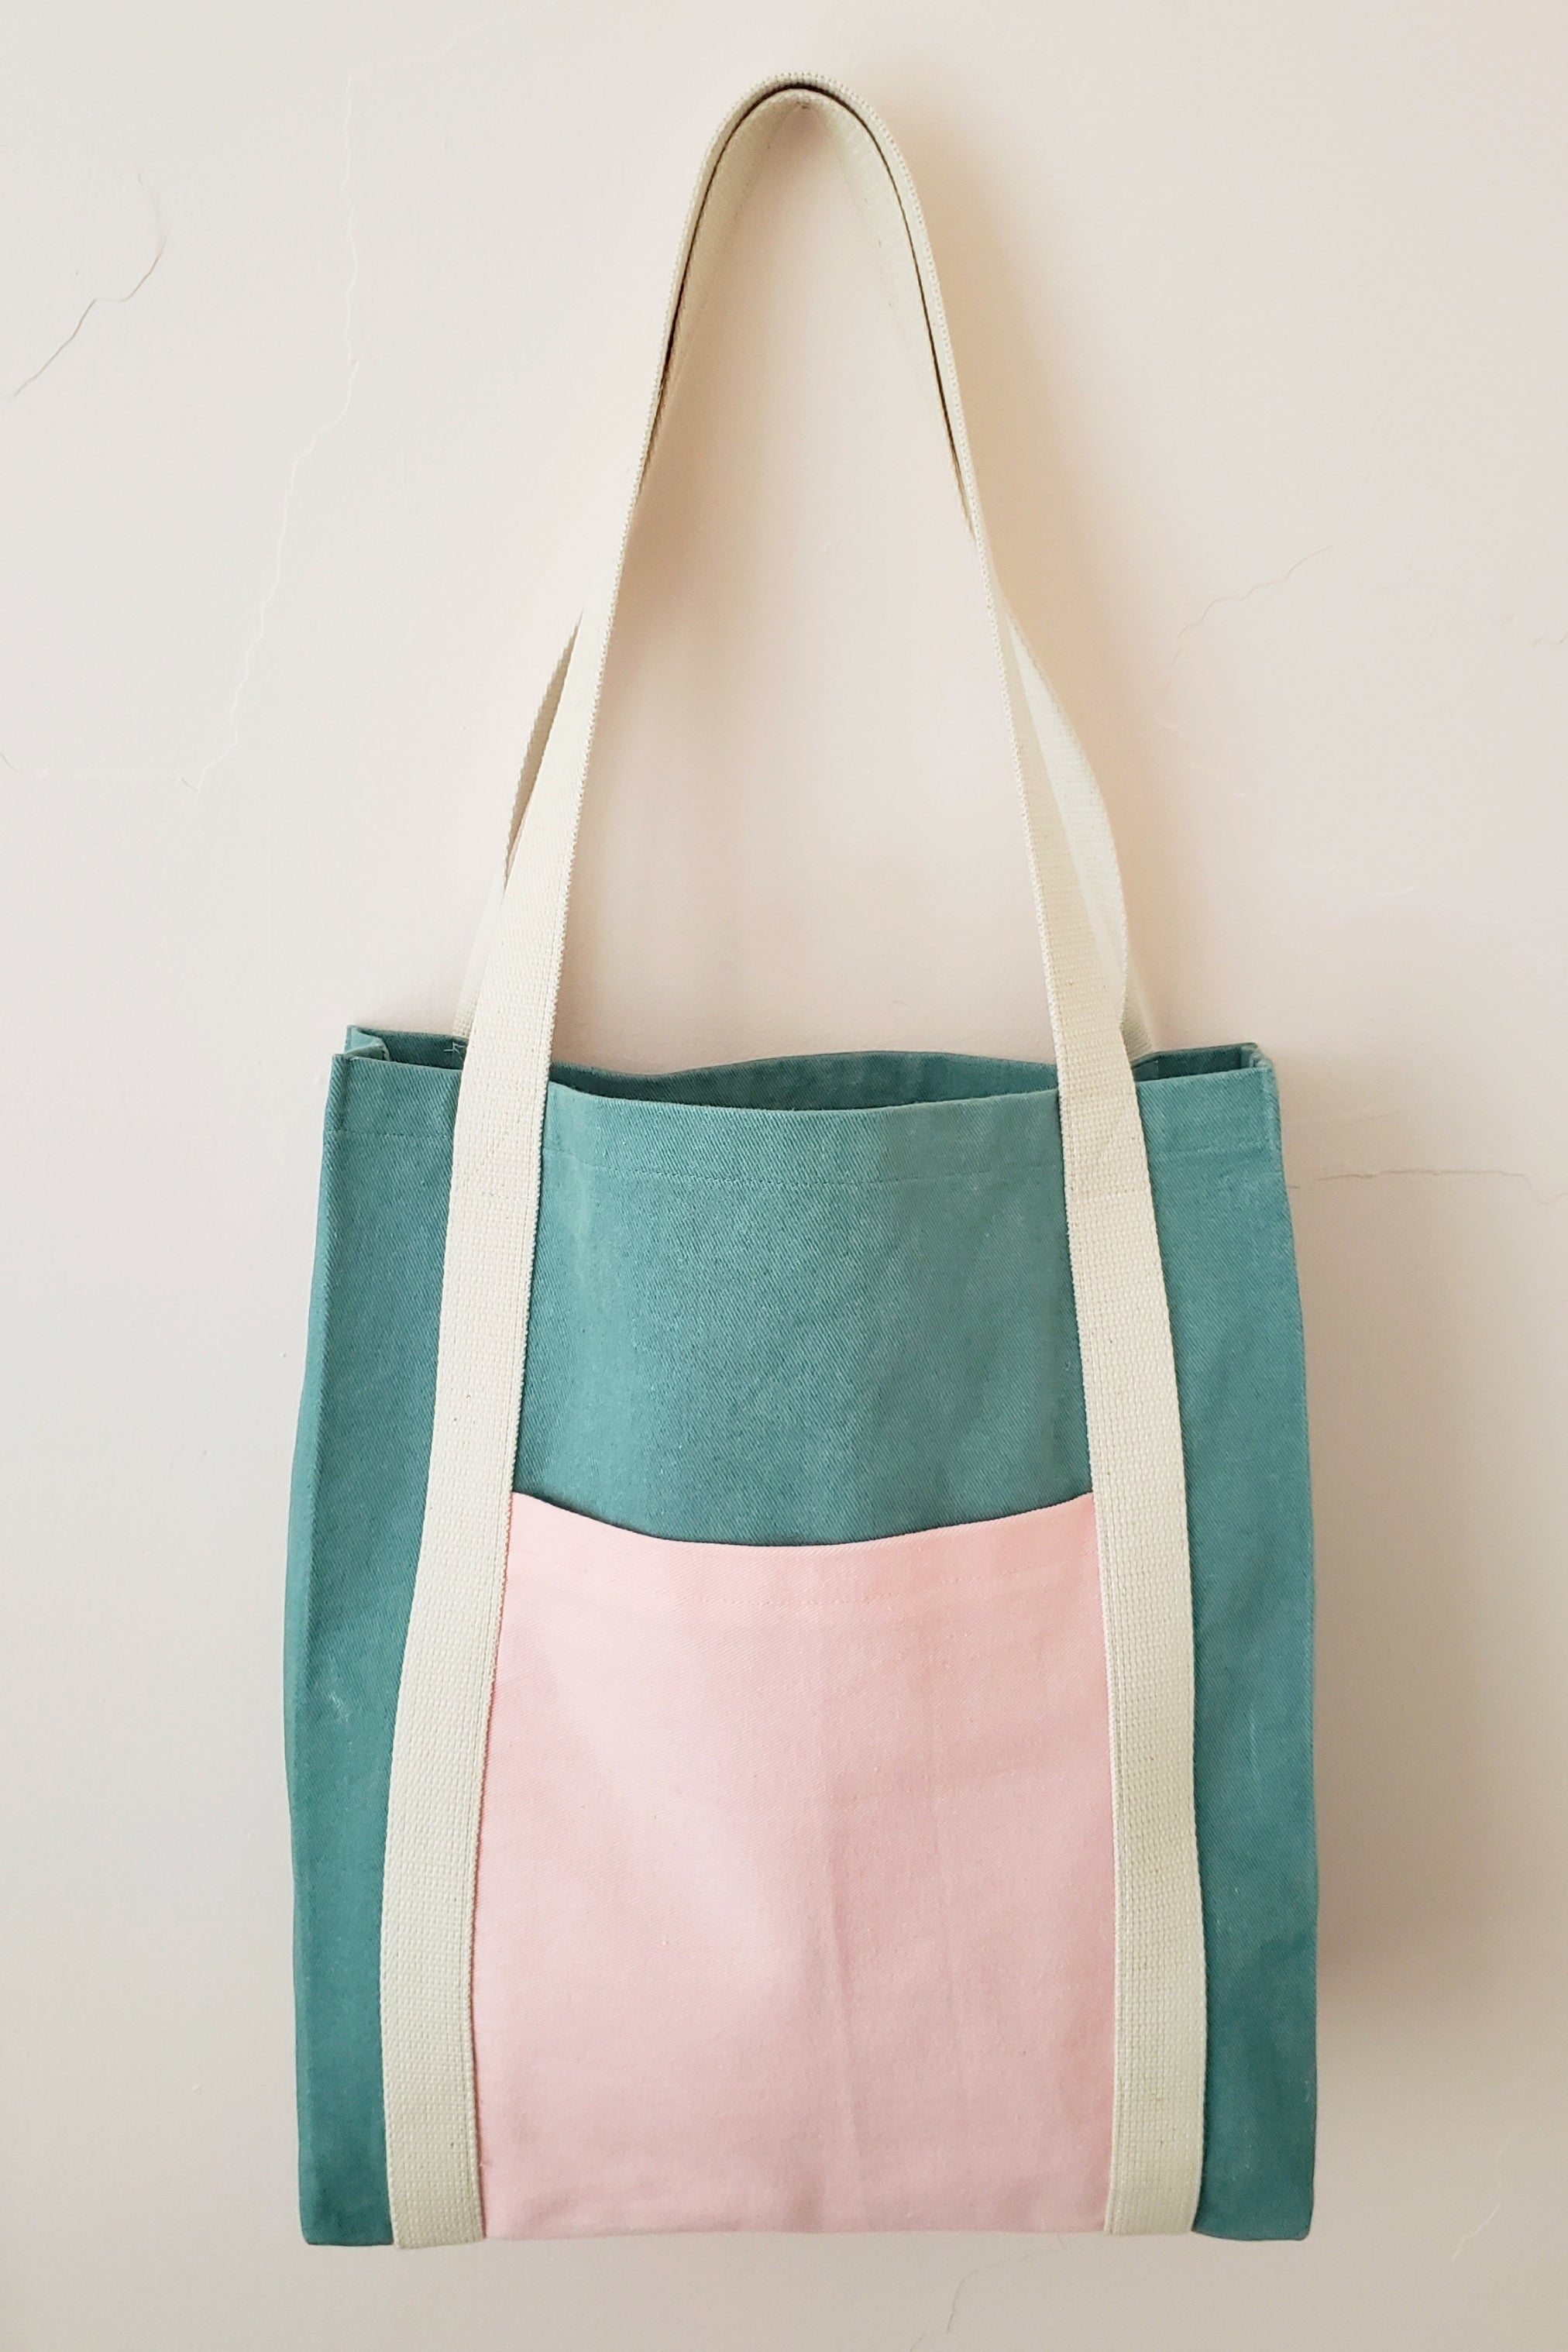 Free Tote Bag Sewing Pattern  Heather Handmade